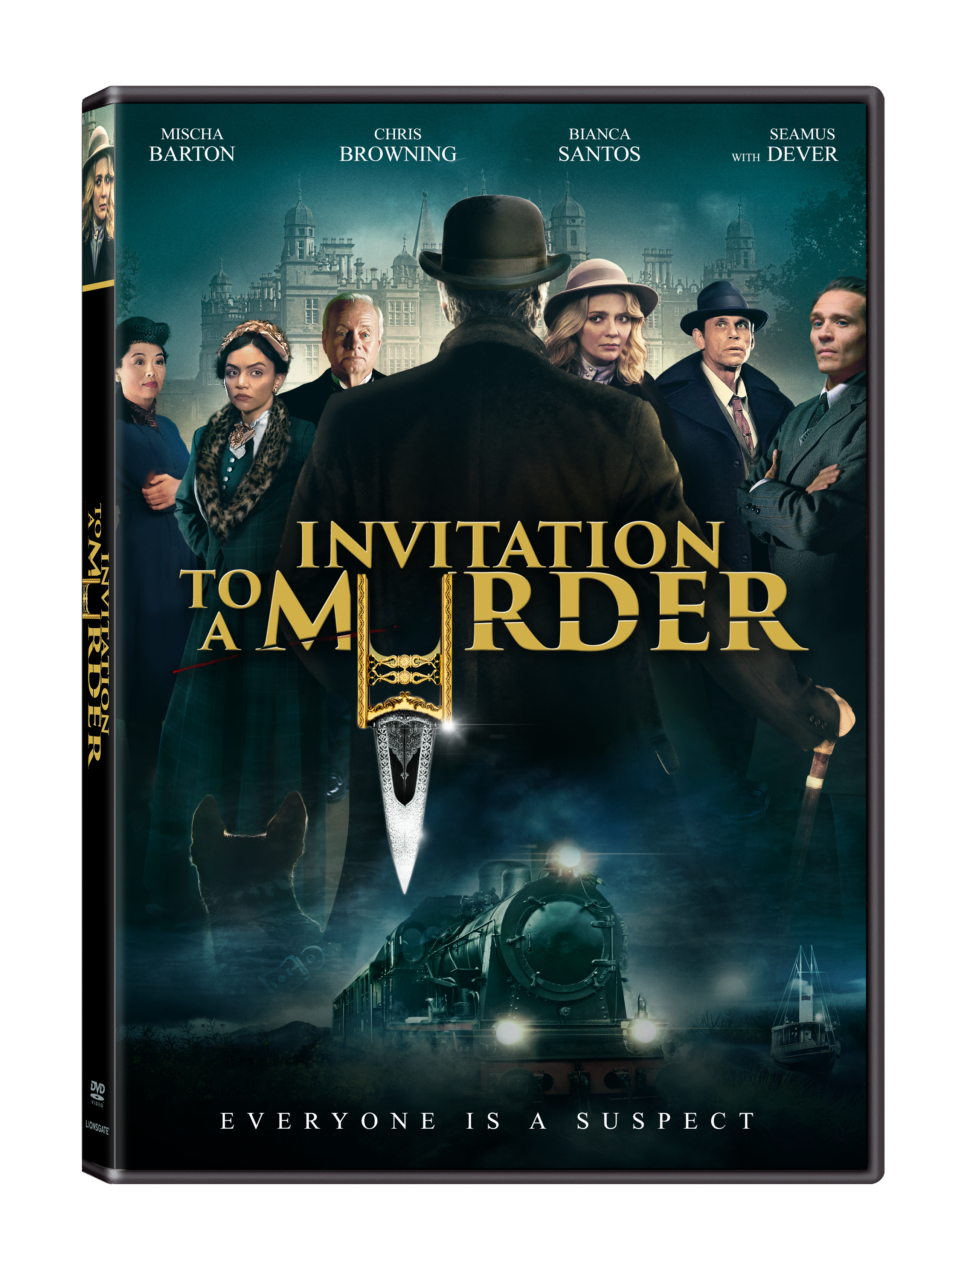 Invitation To A Murder DVD cover (Lionsgate)